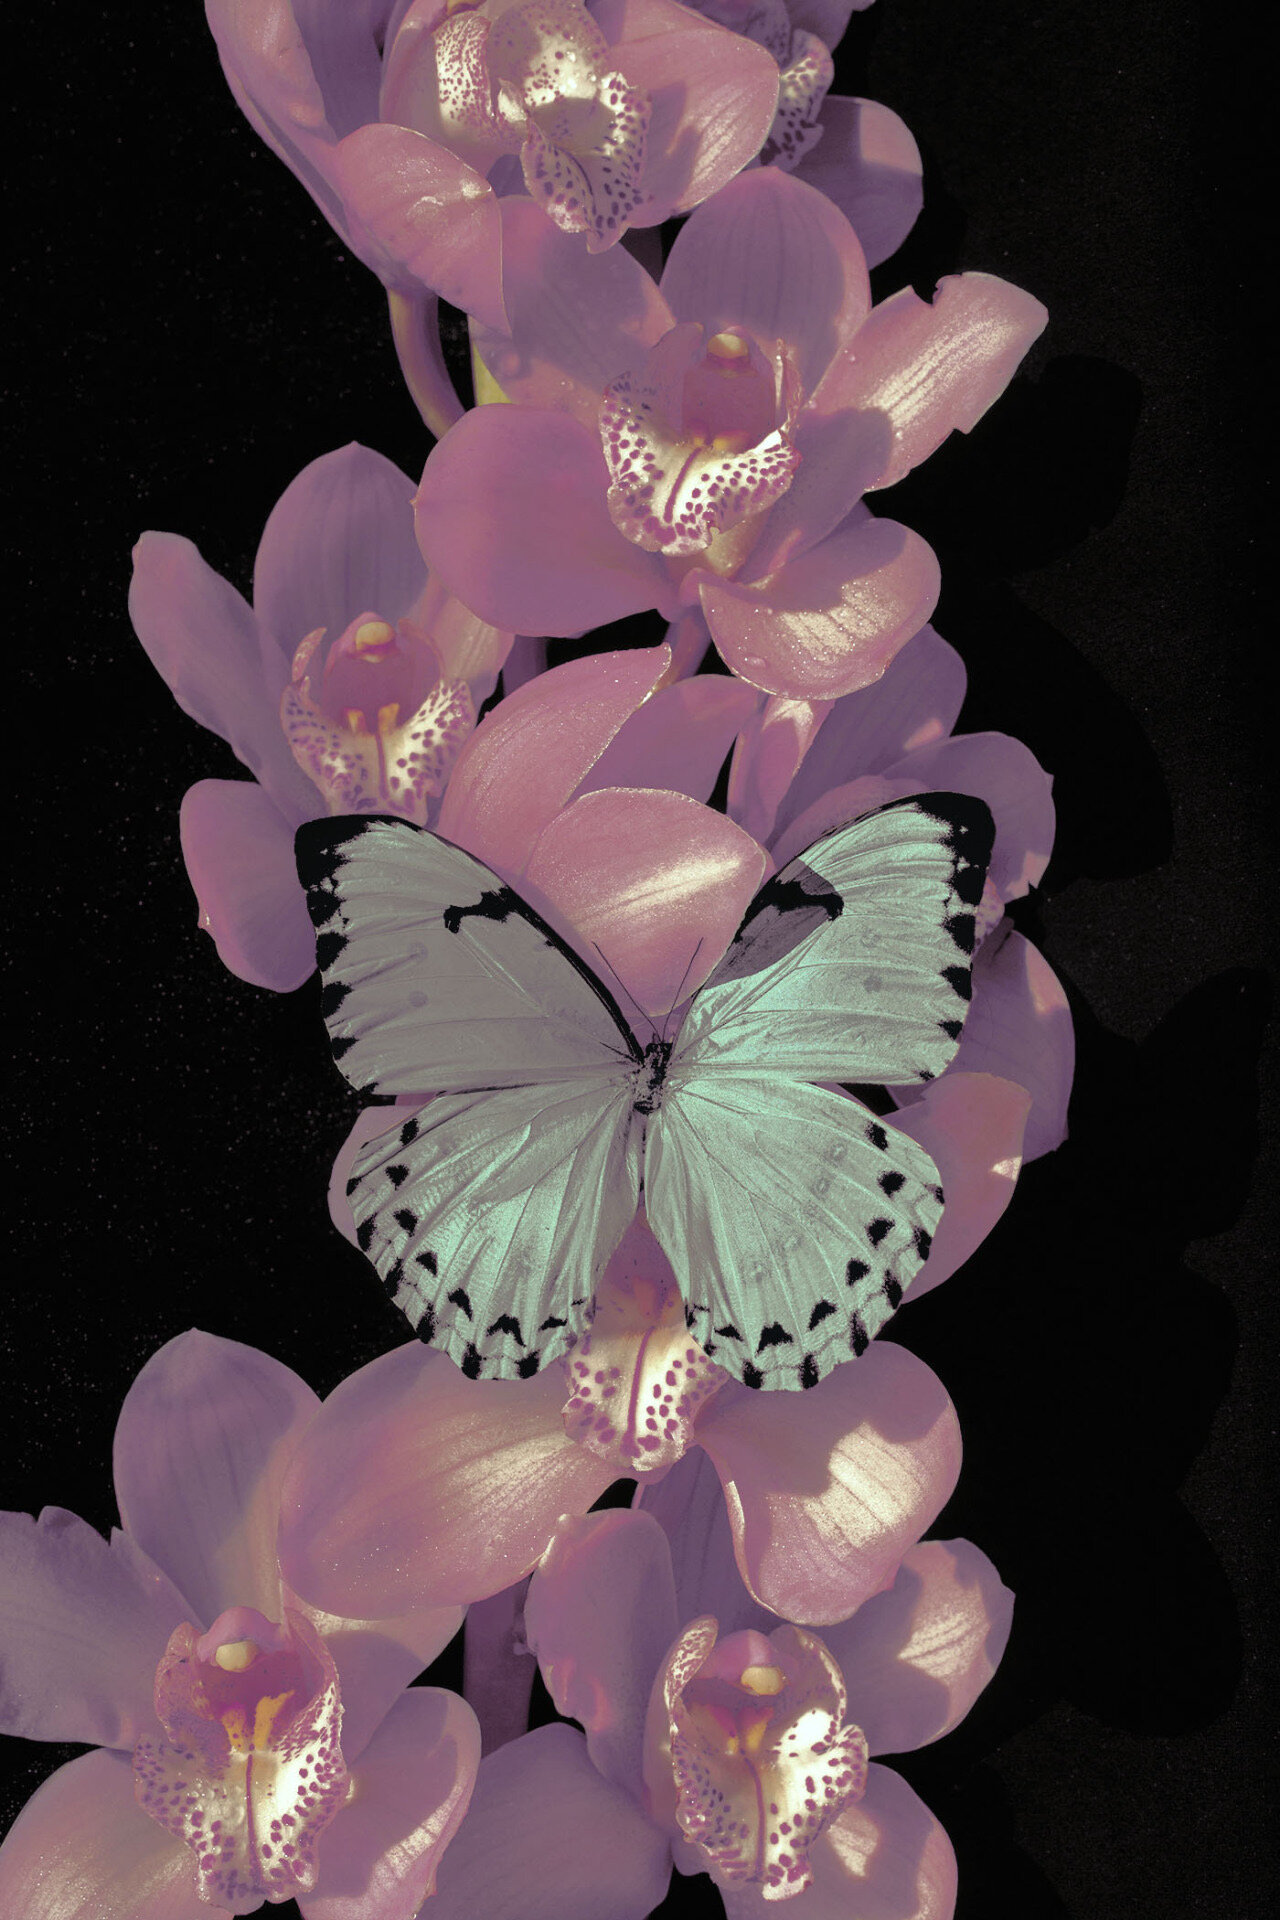 Orchids and butterfly — Xuebing Du